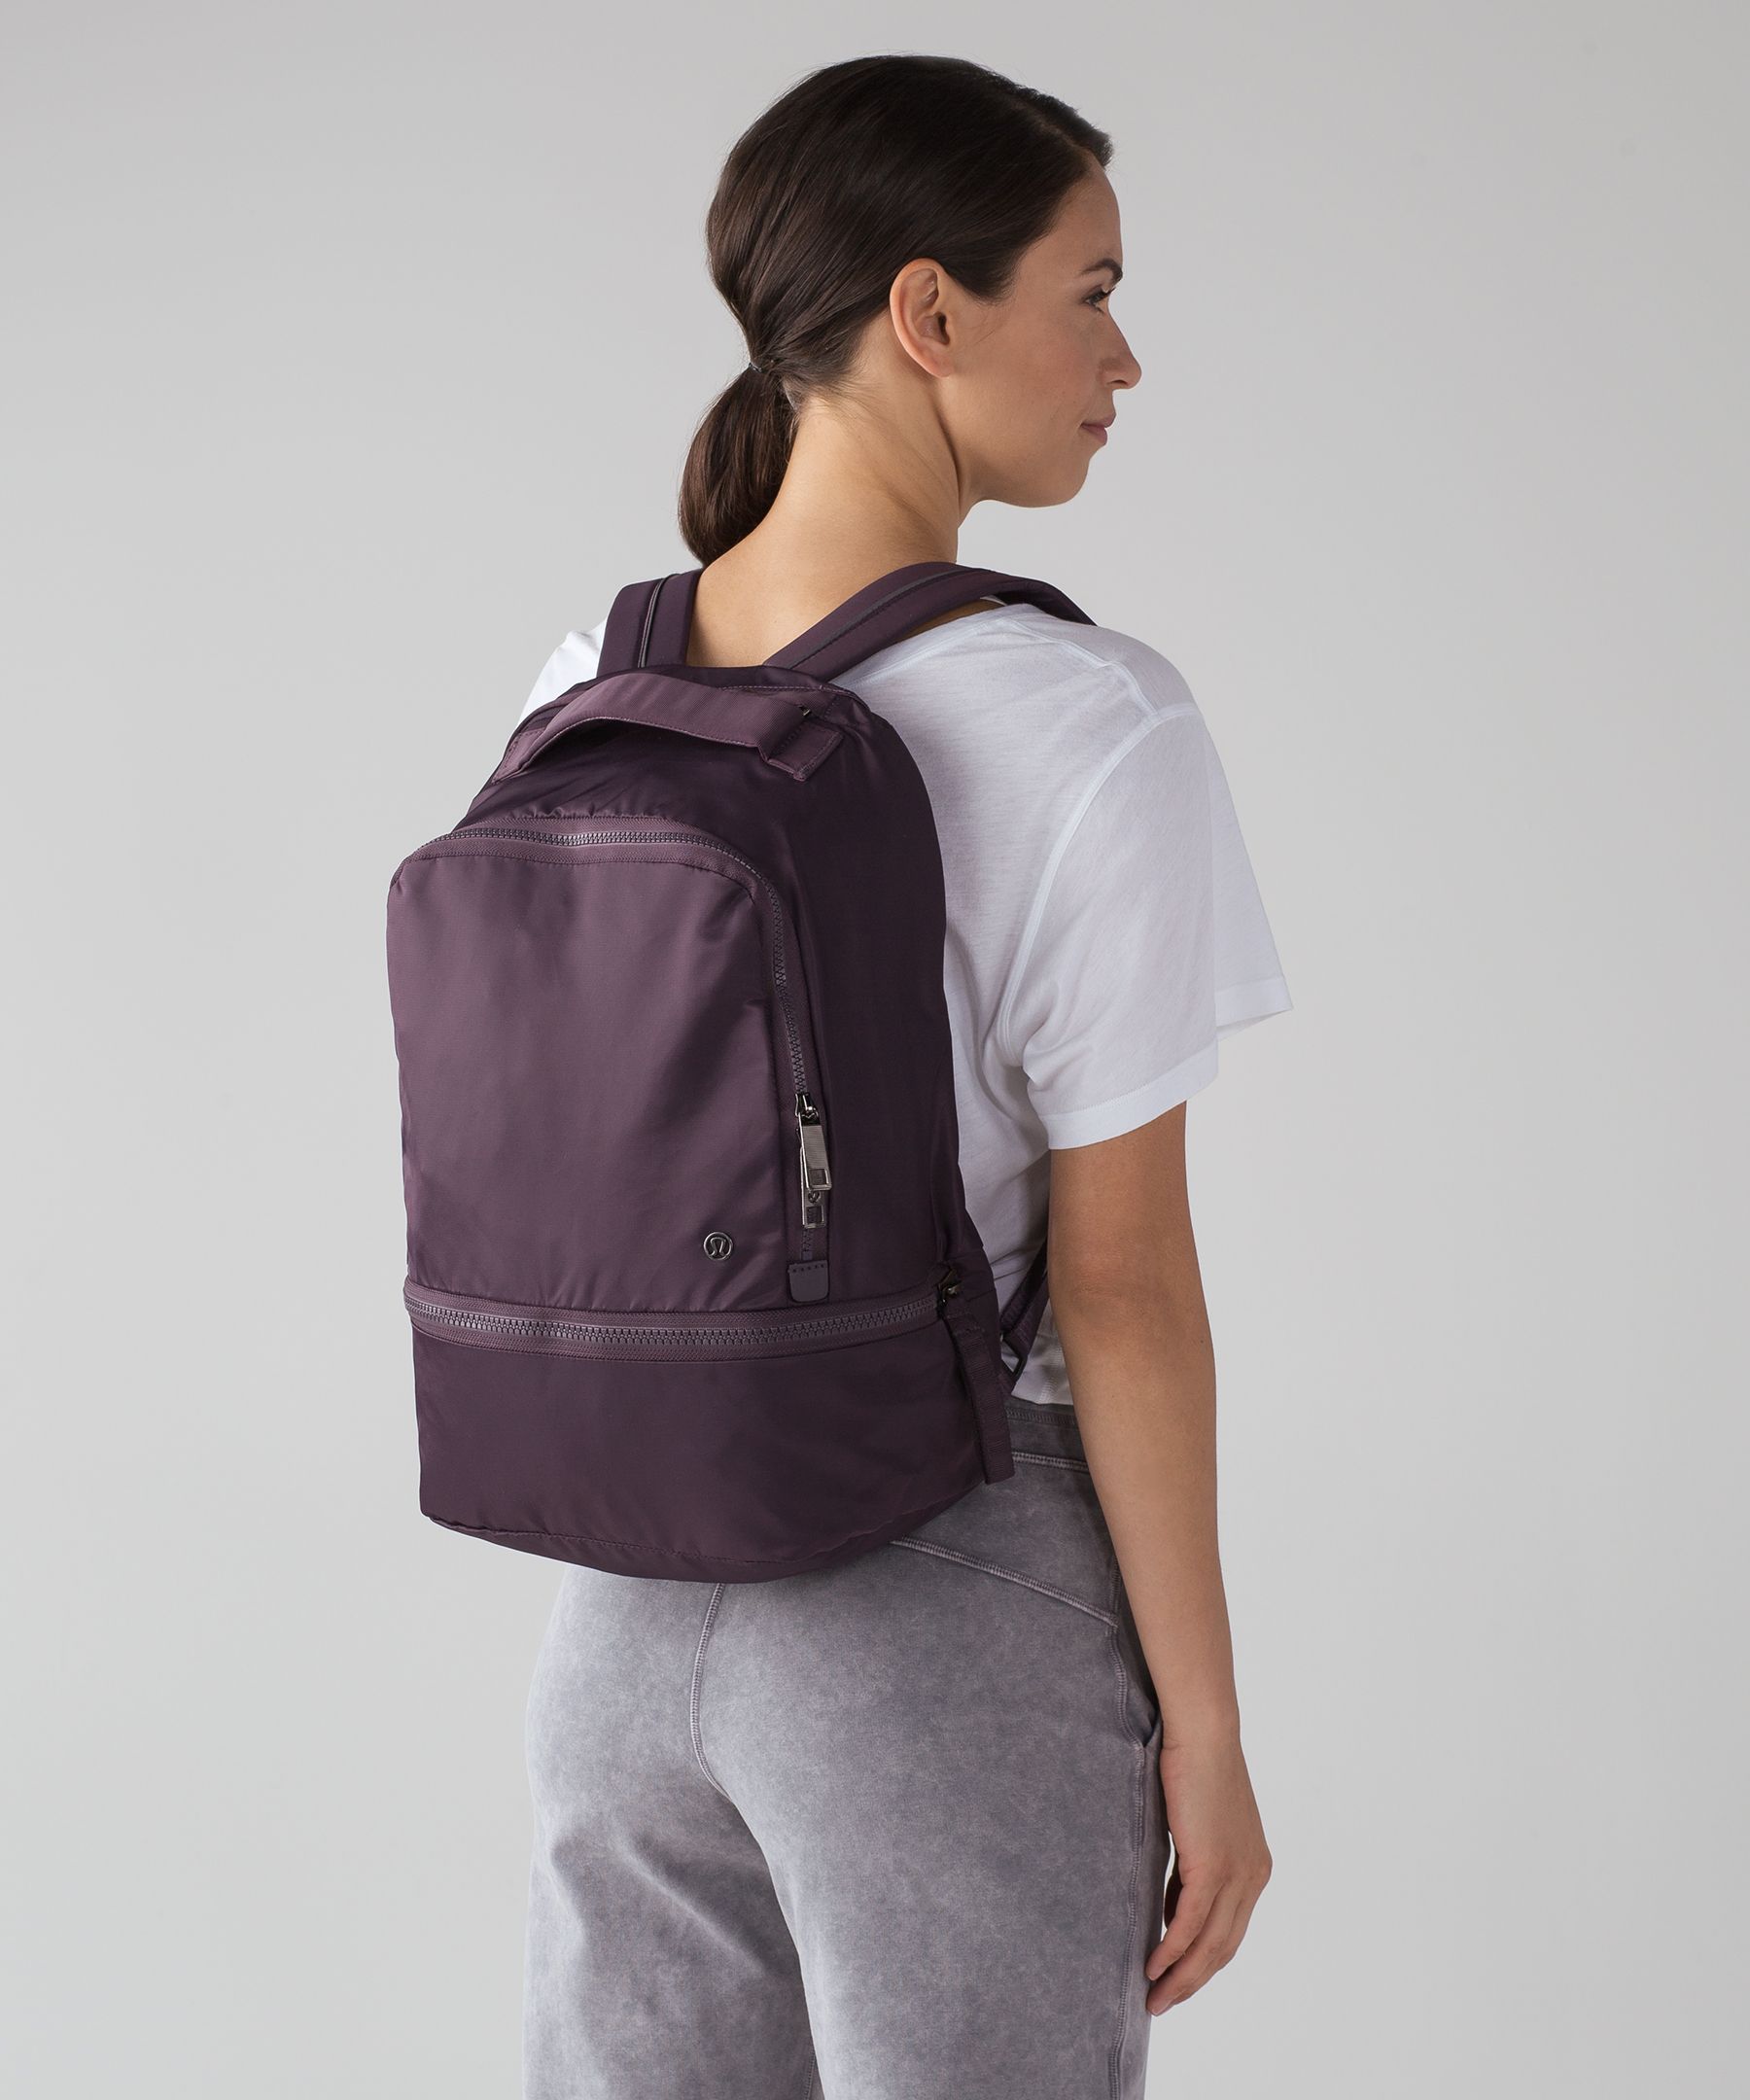 lululemon city adventurer backpack